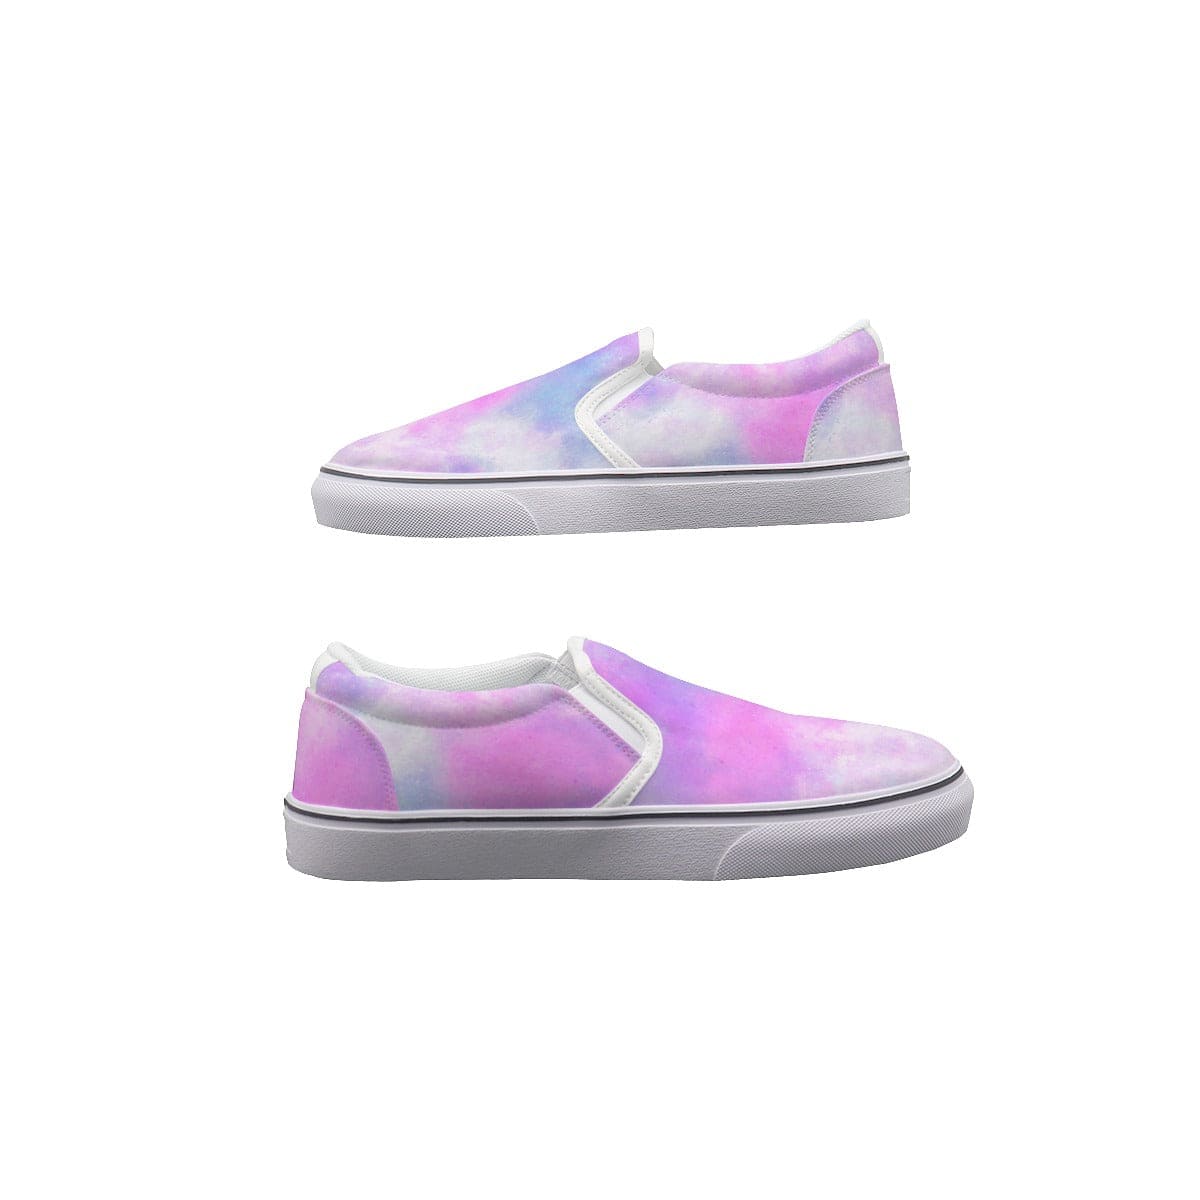 Yoycol Galaxy Glam -  Women's Slip On Sneakers